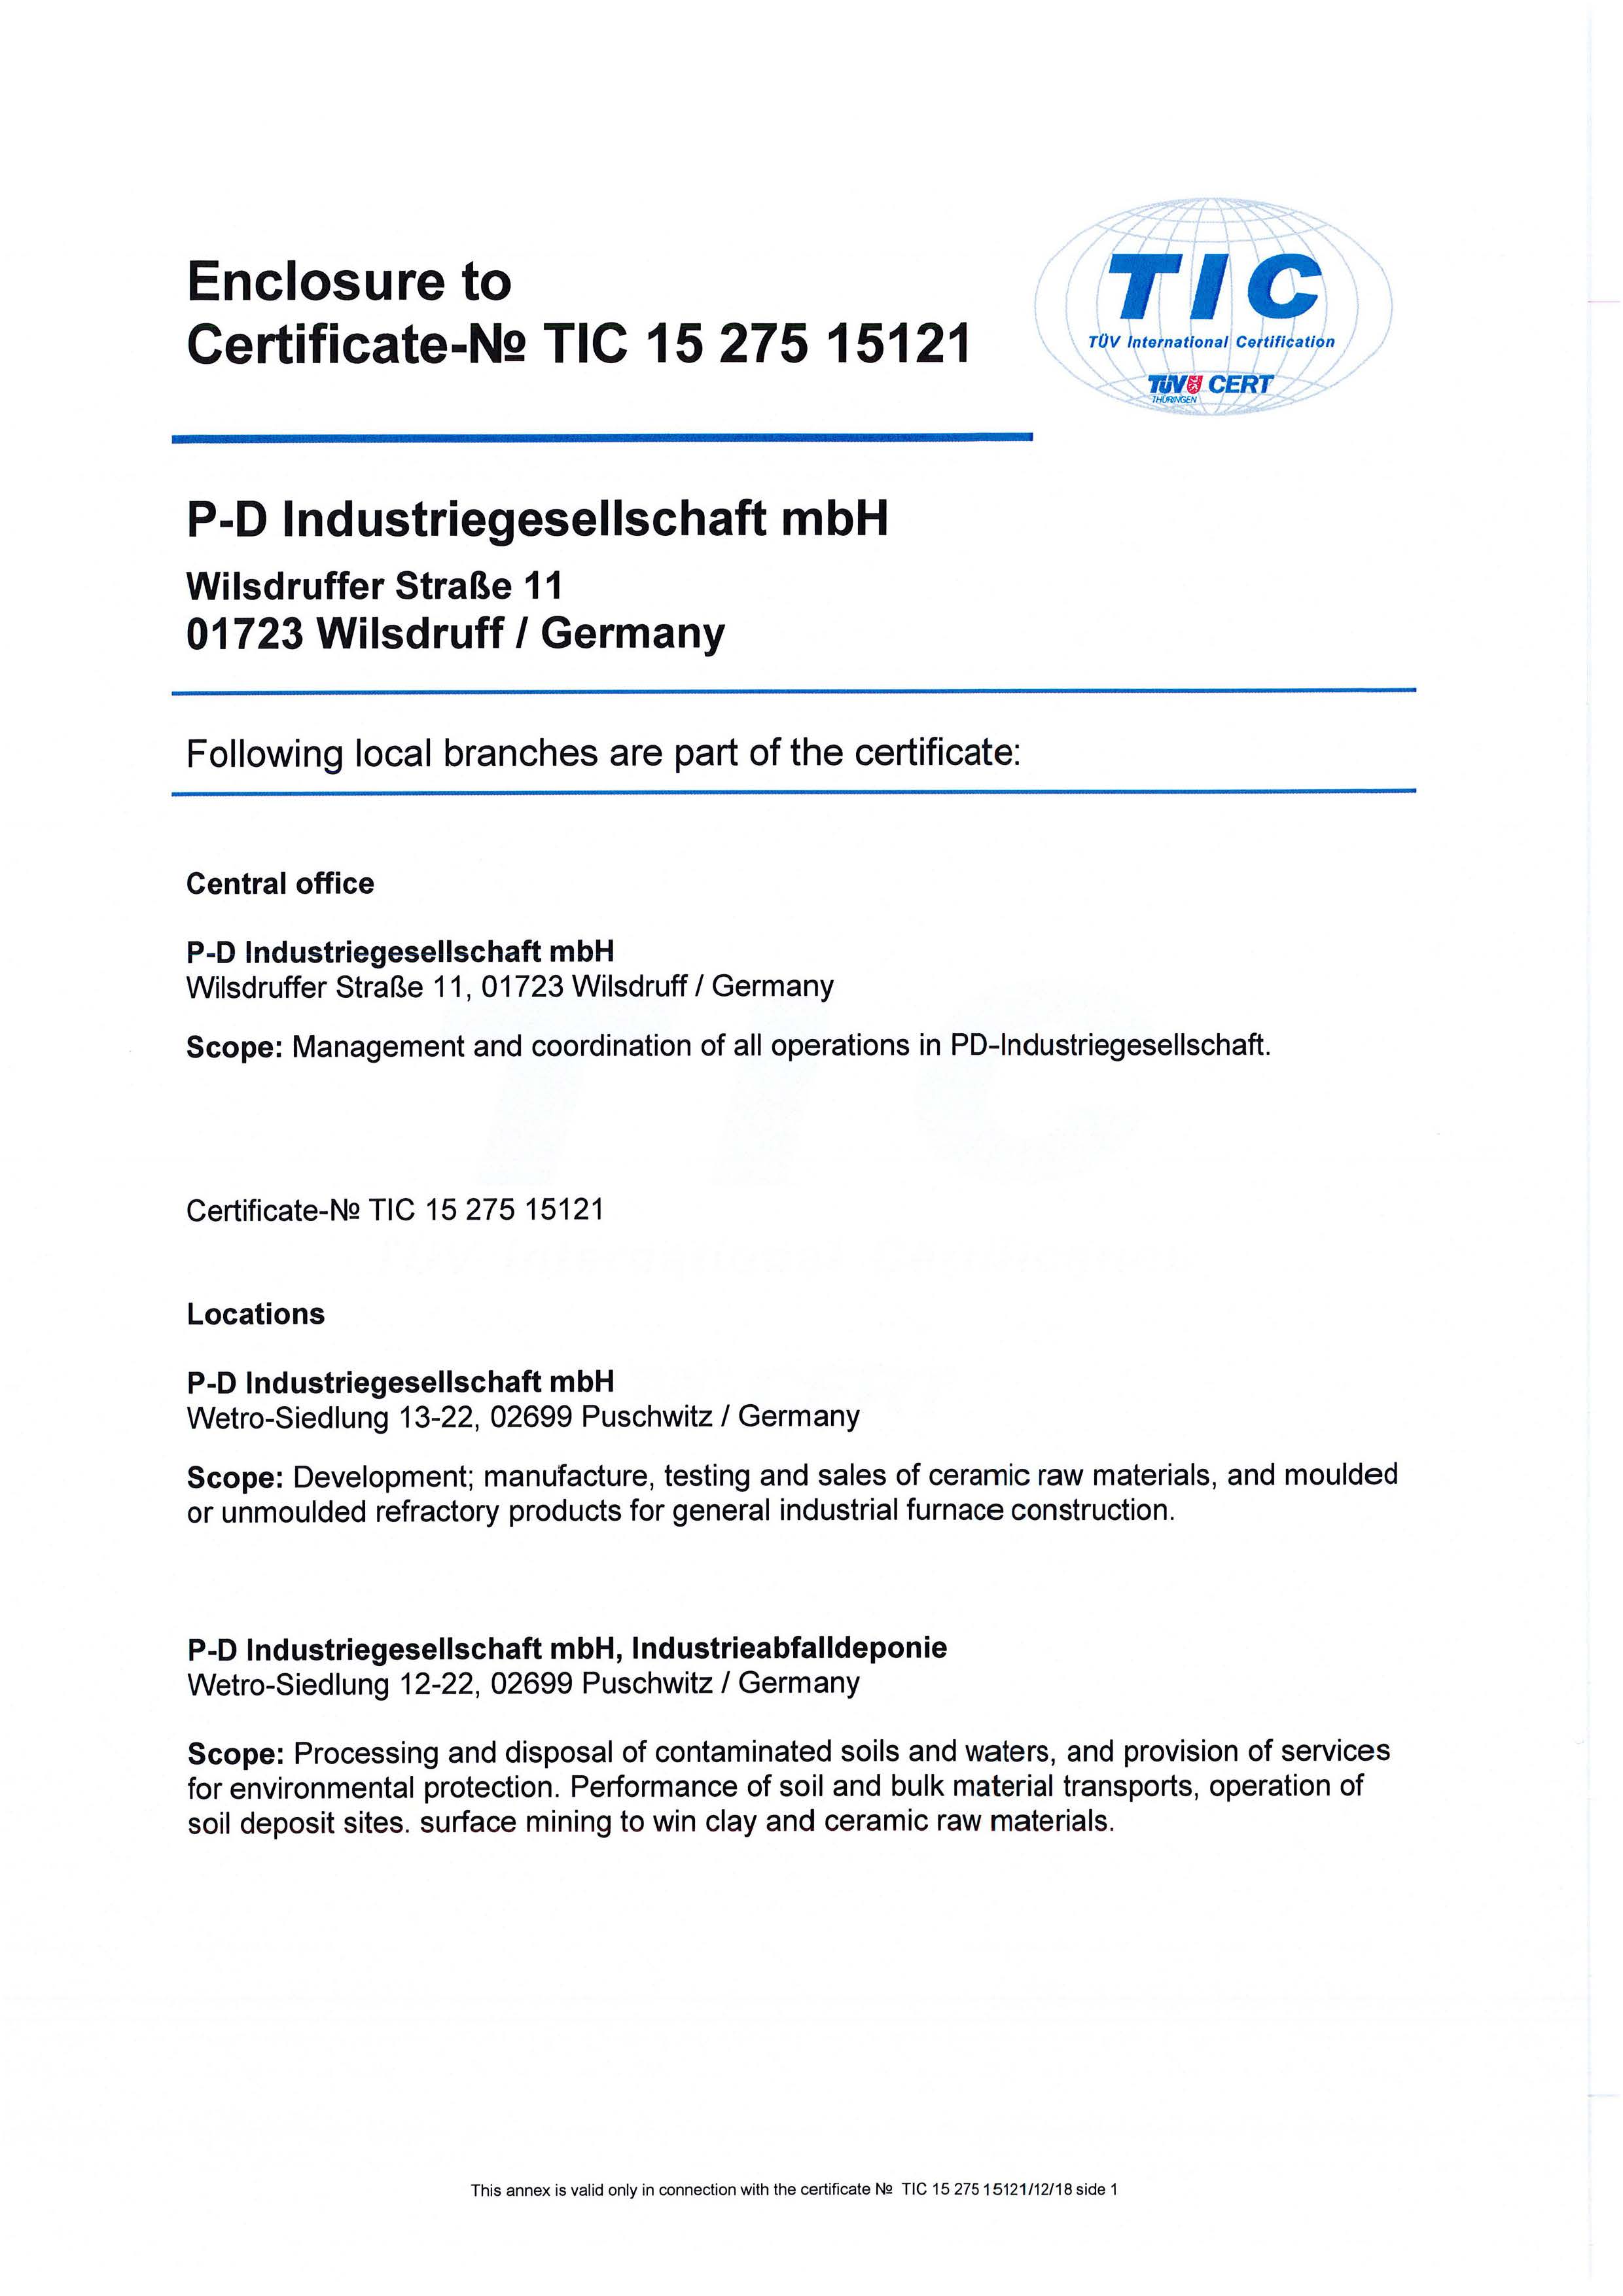 P-D Industriegesellschaft mbH · DIN EN ISO 50001:2011 (Enclosure)